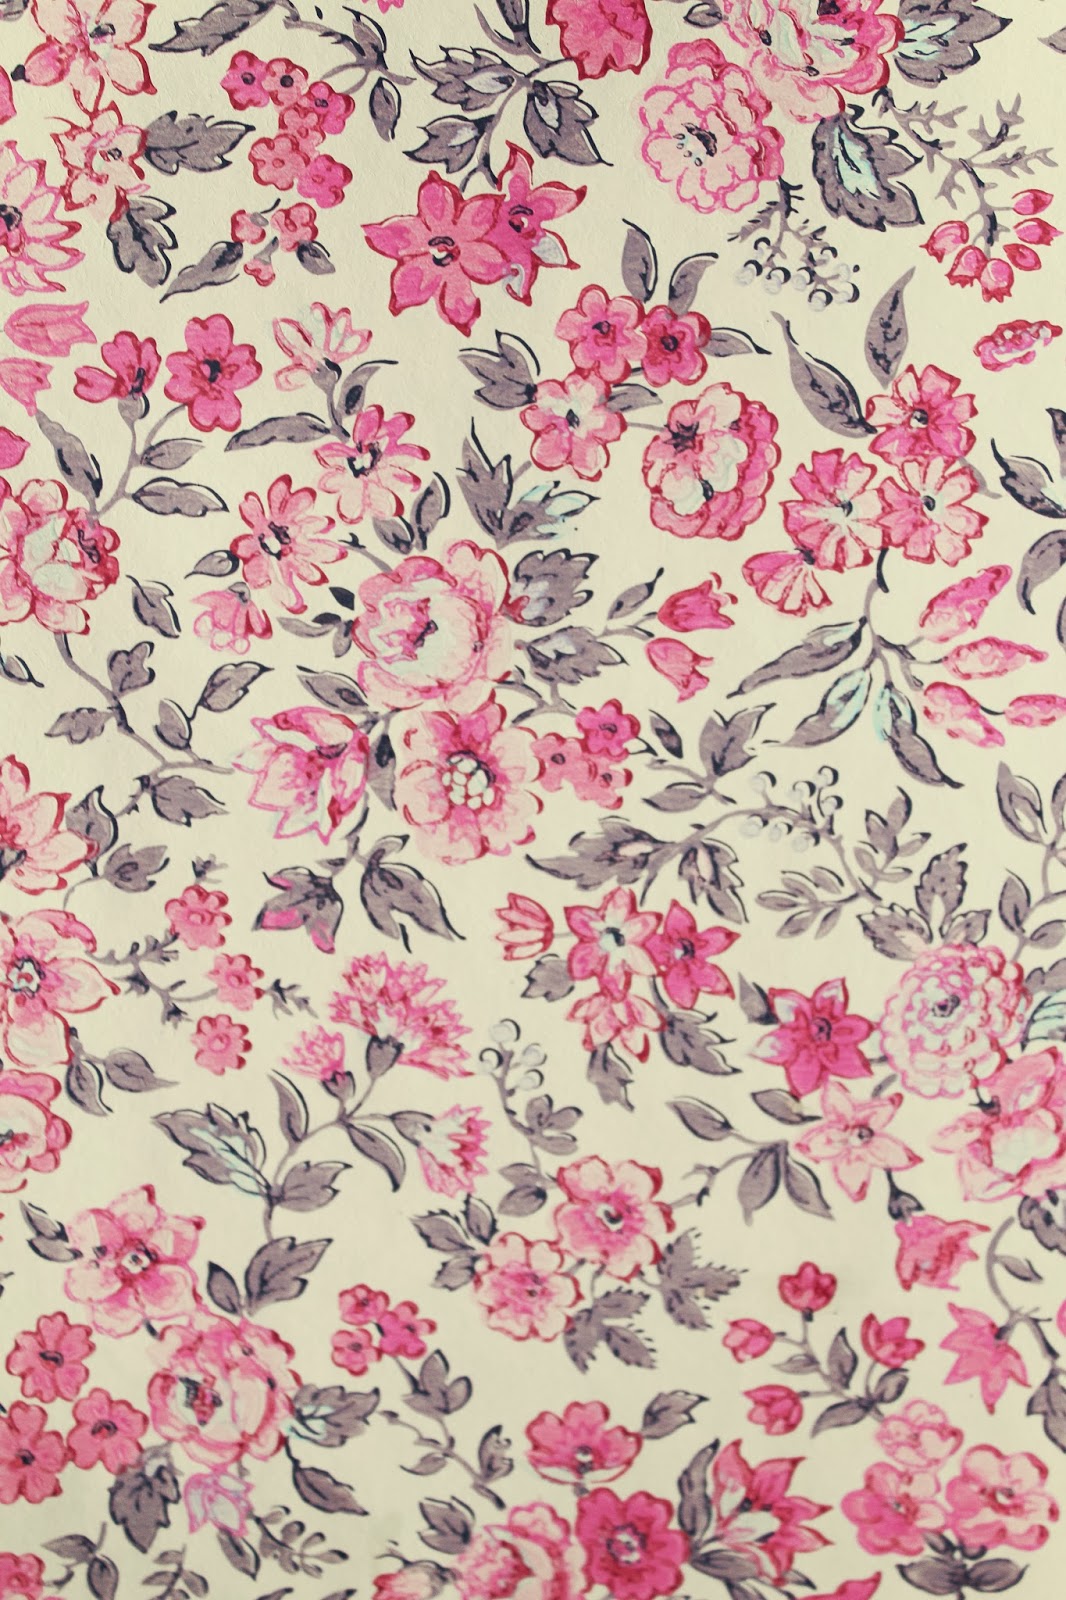 Tumblr floral wallpaper